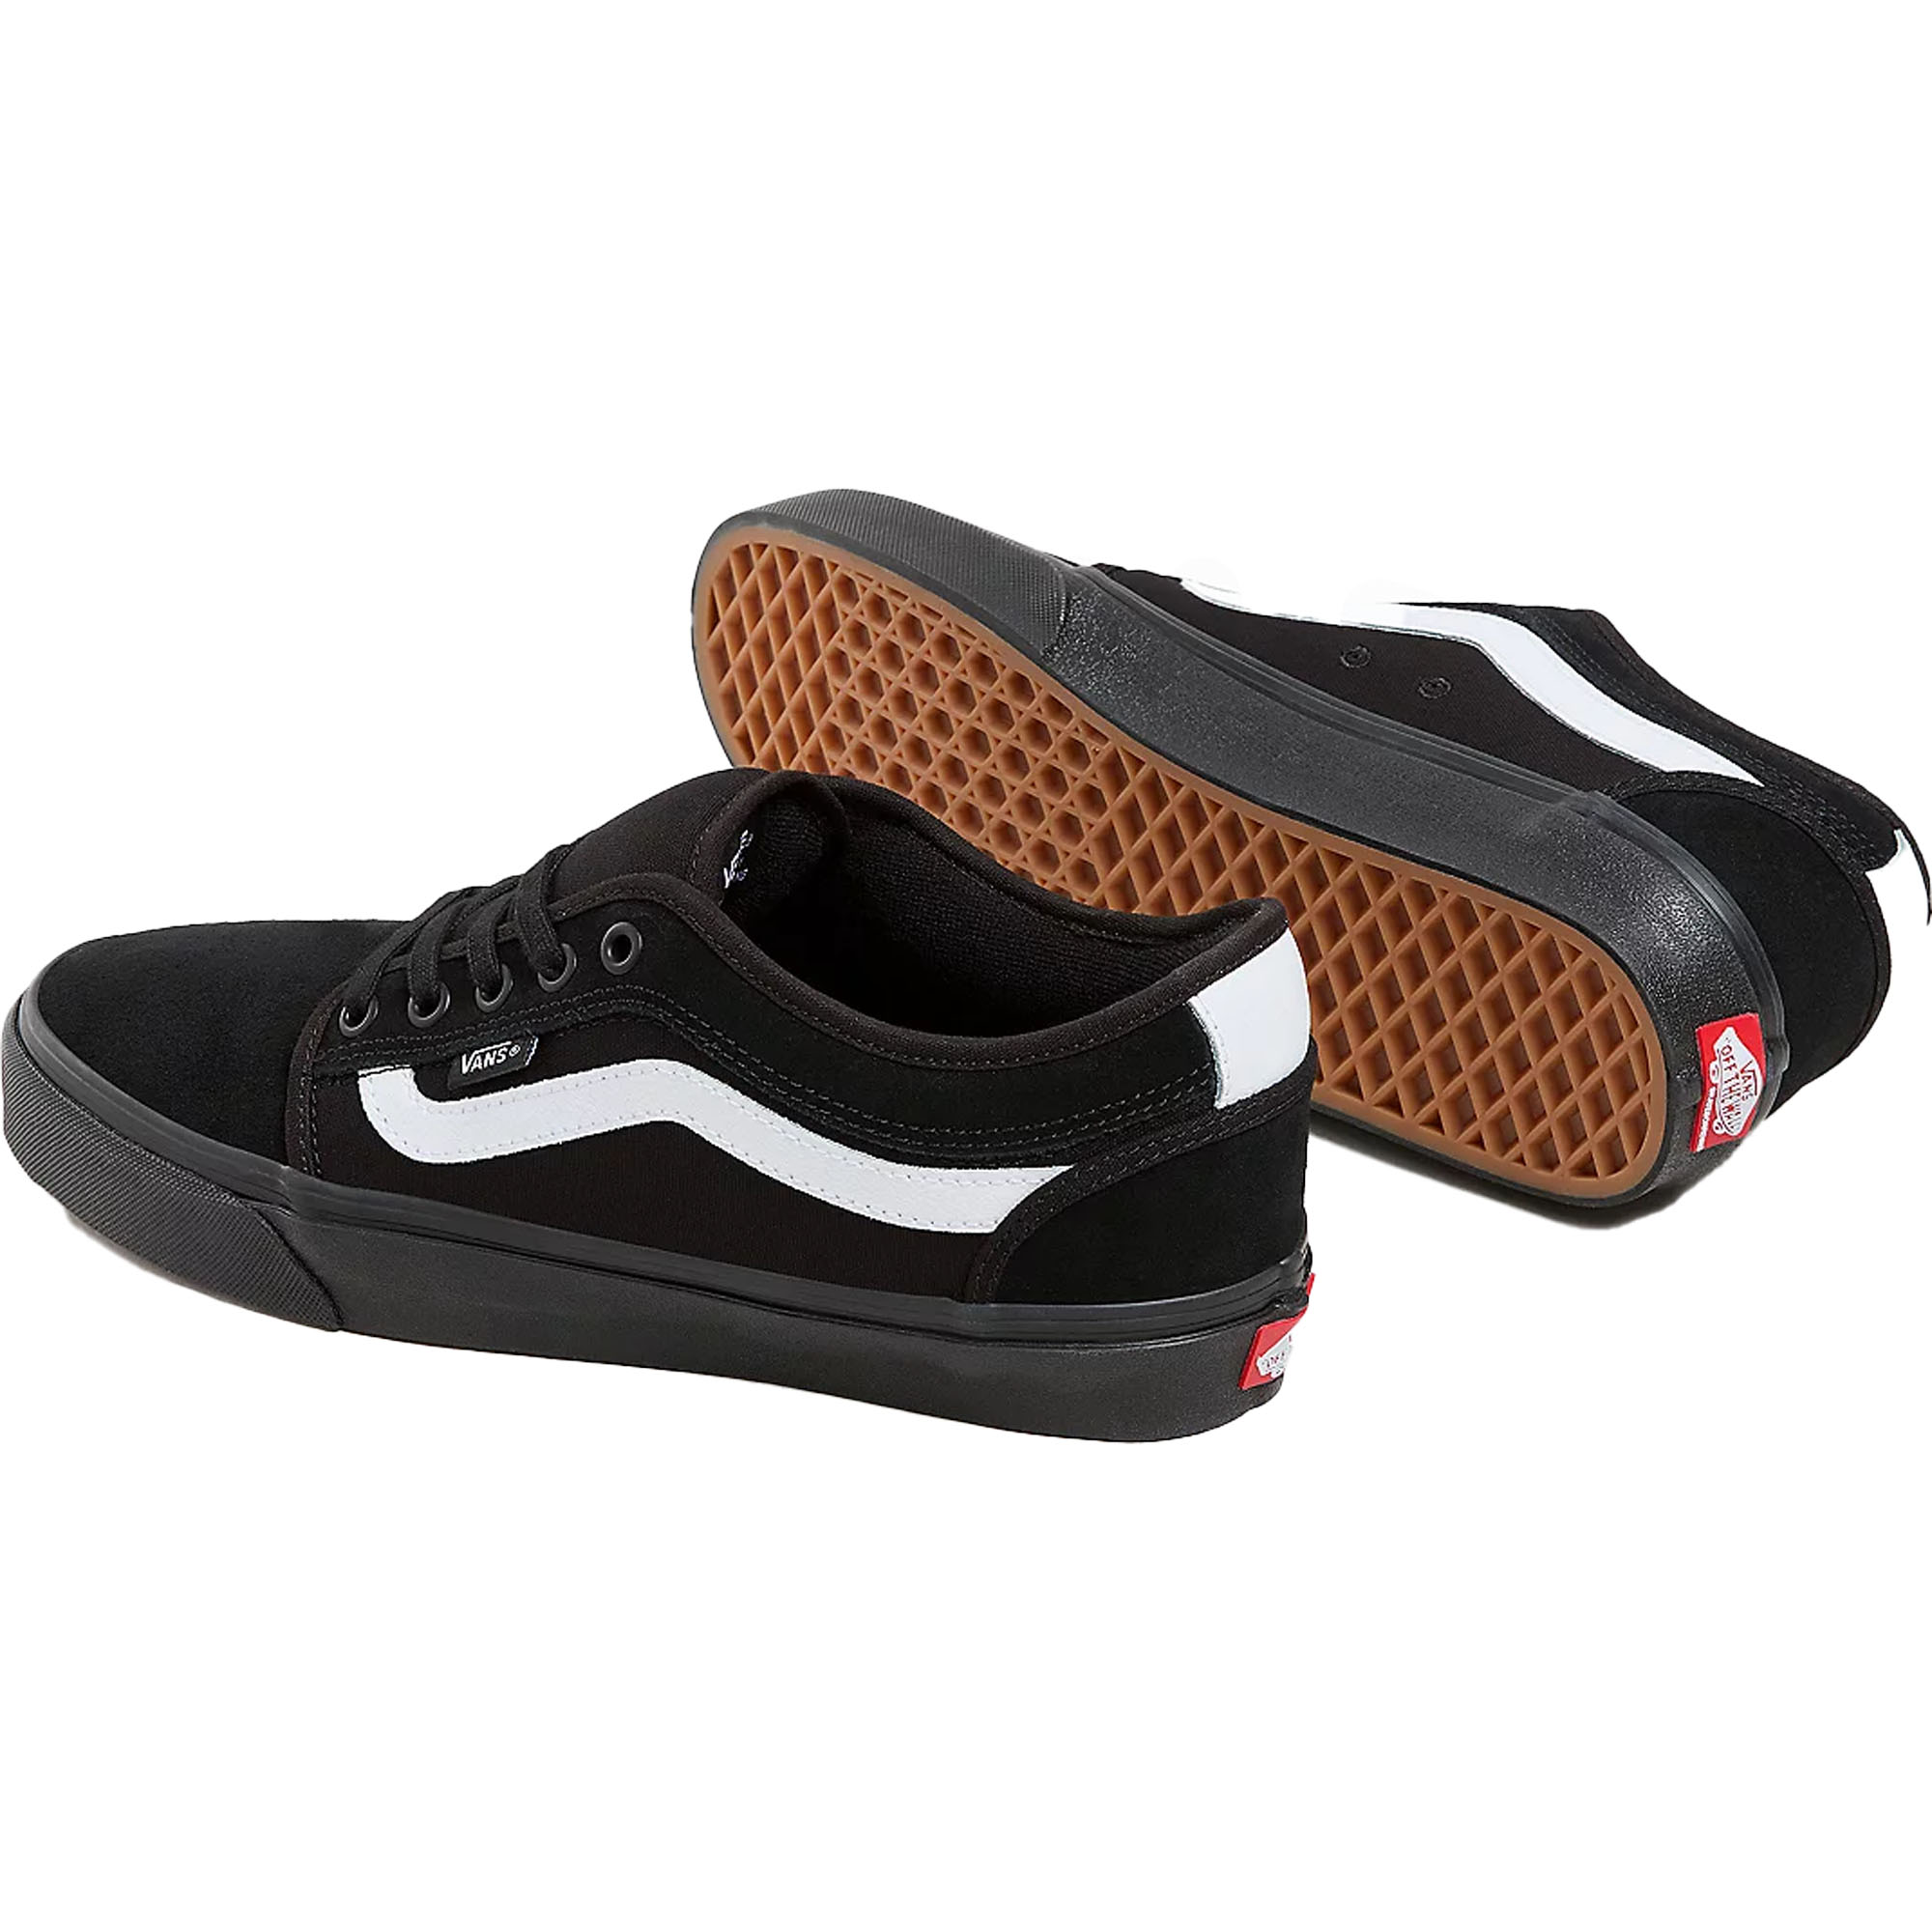 Vans Chukka Low Sidestripe Trainers/Skate Shoes